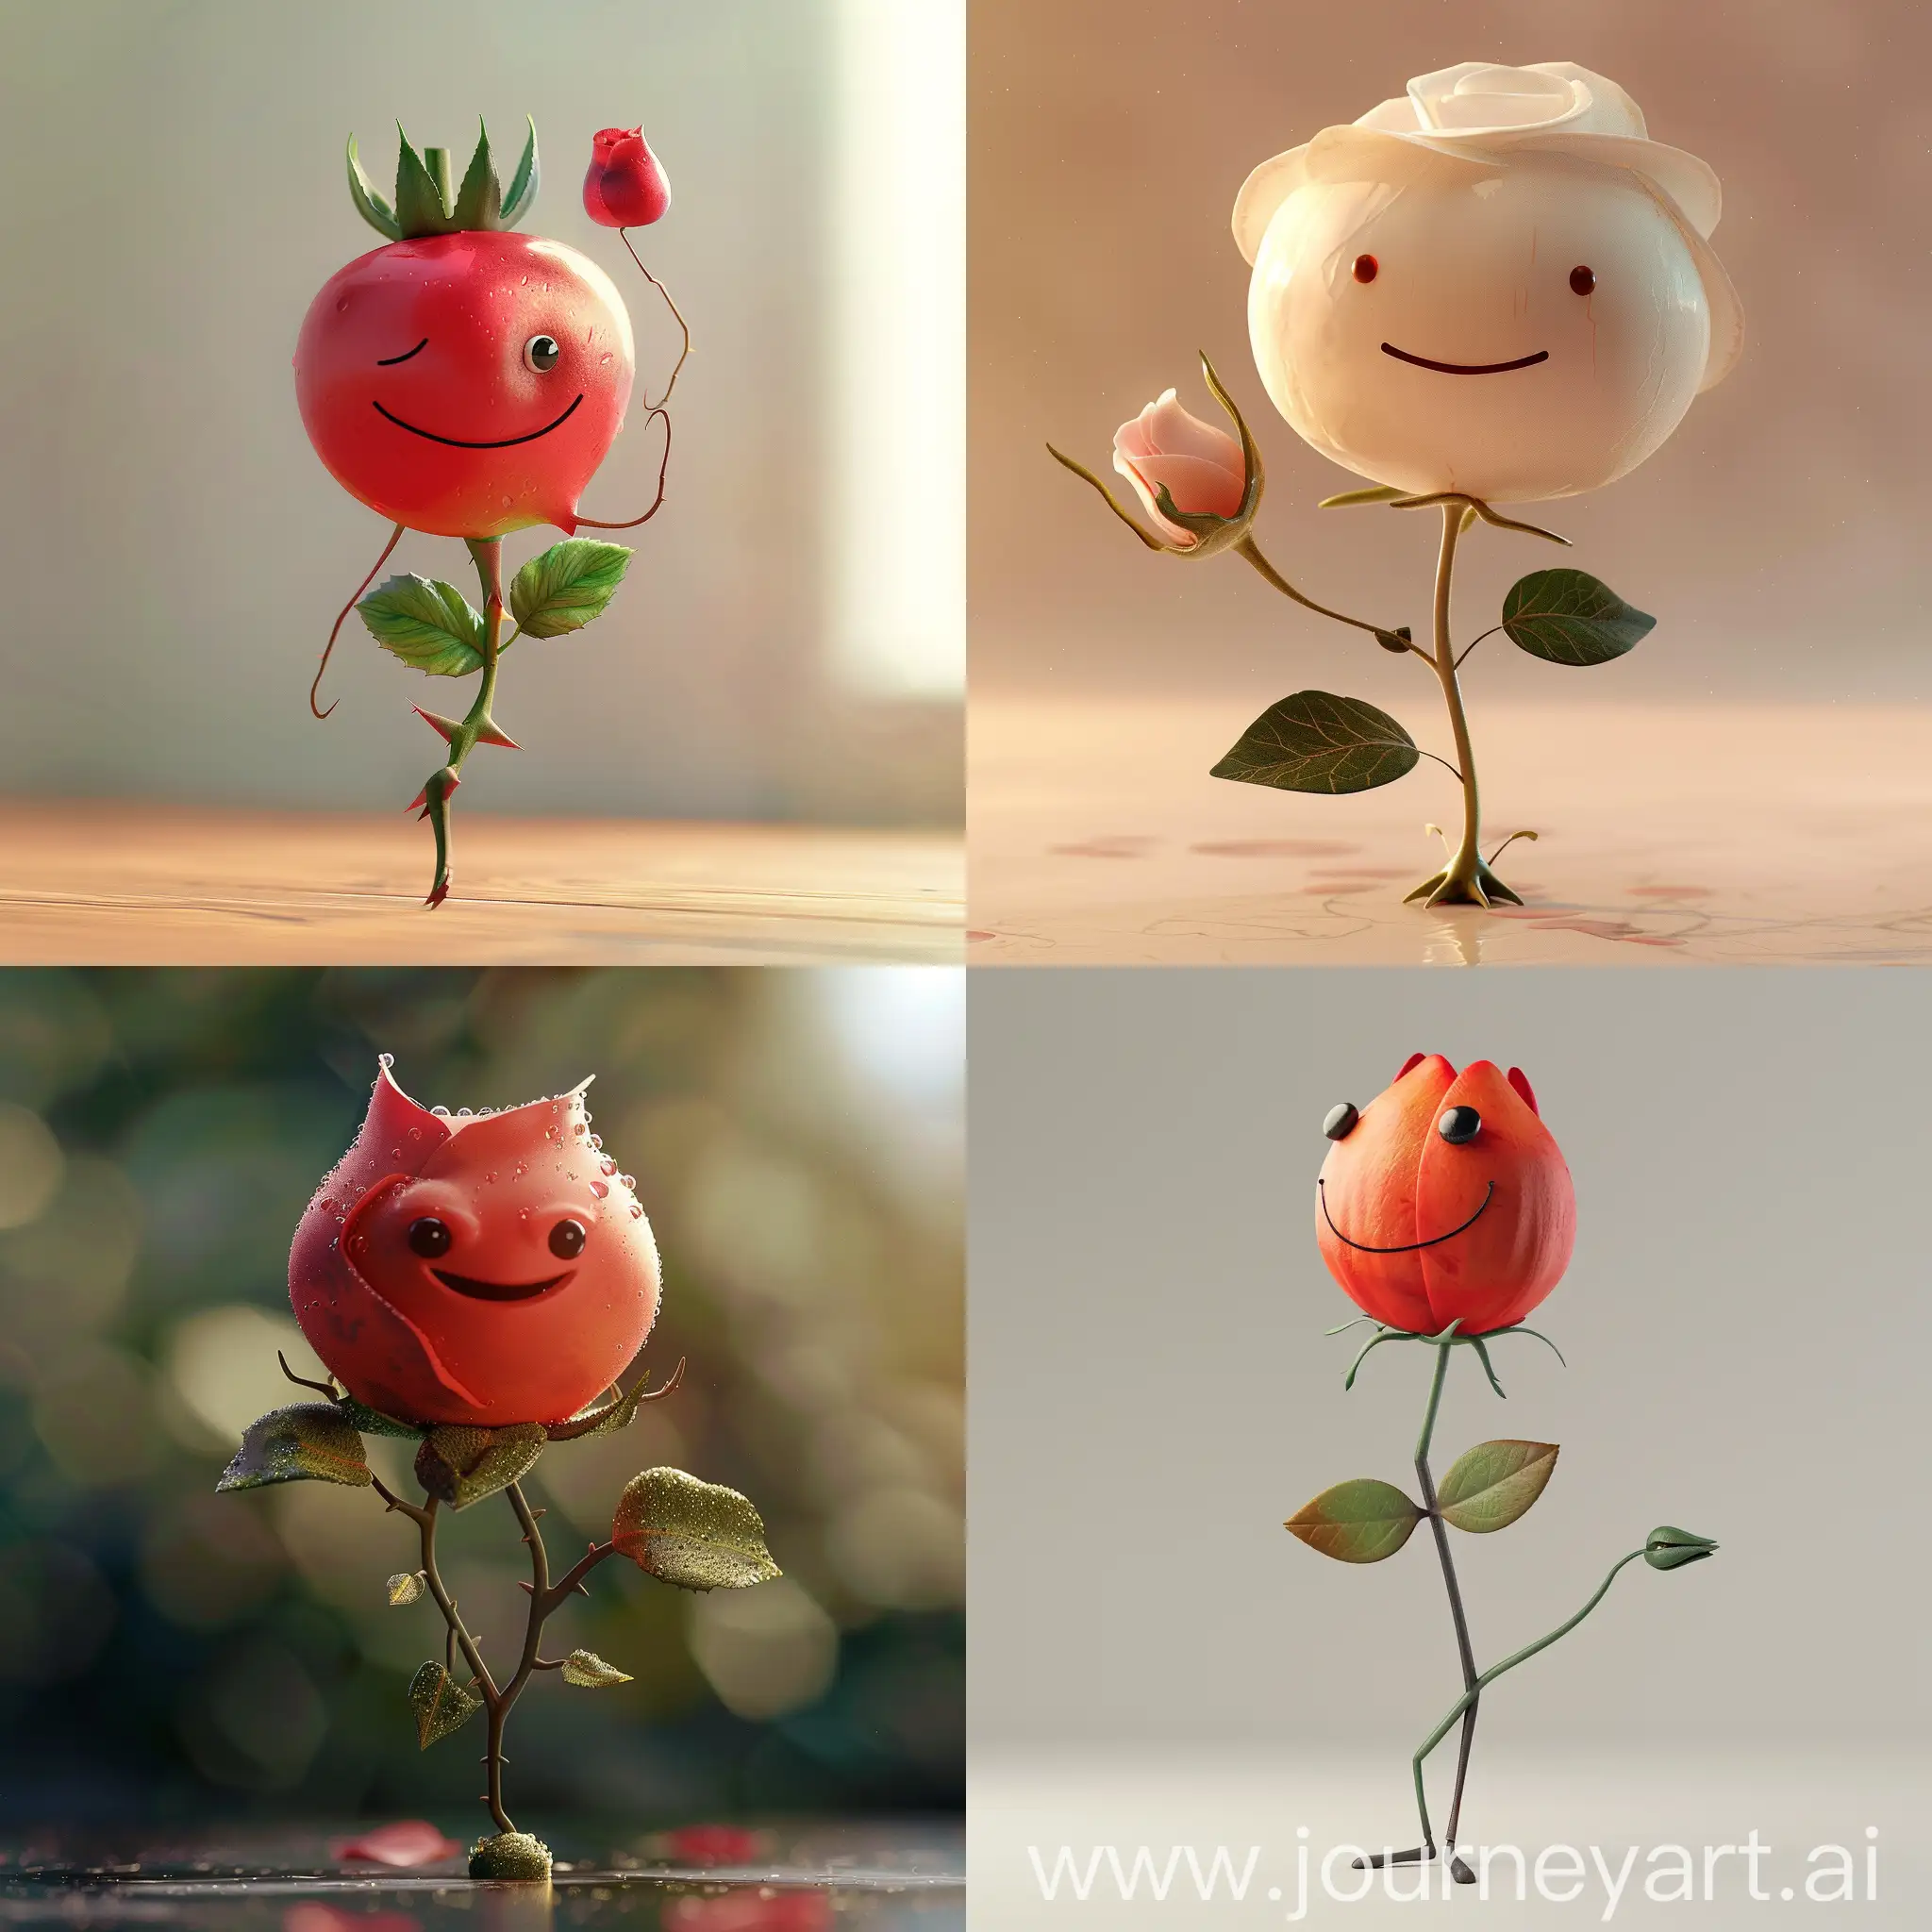 Cute-3D-Character-Rose-Sculpture